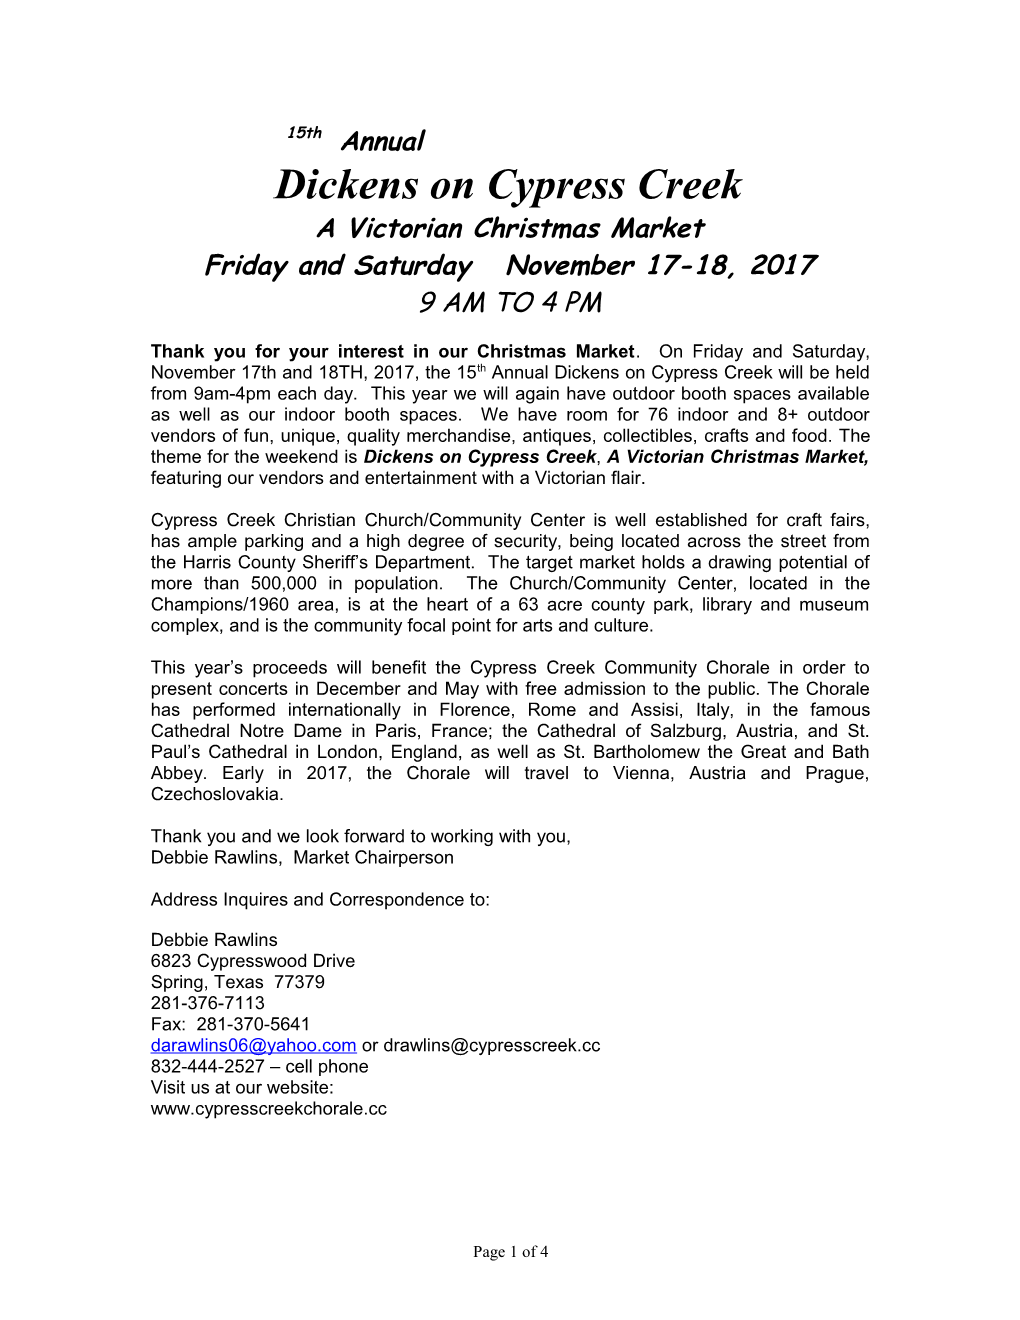 5Th Annual Dickens on Cypress Creek